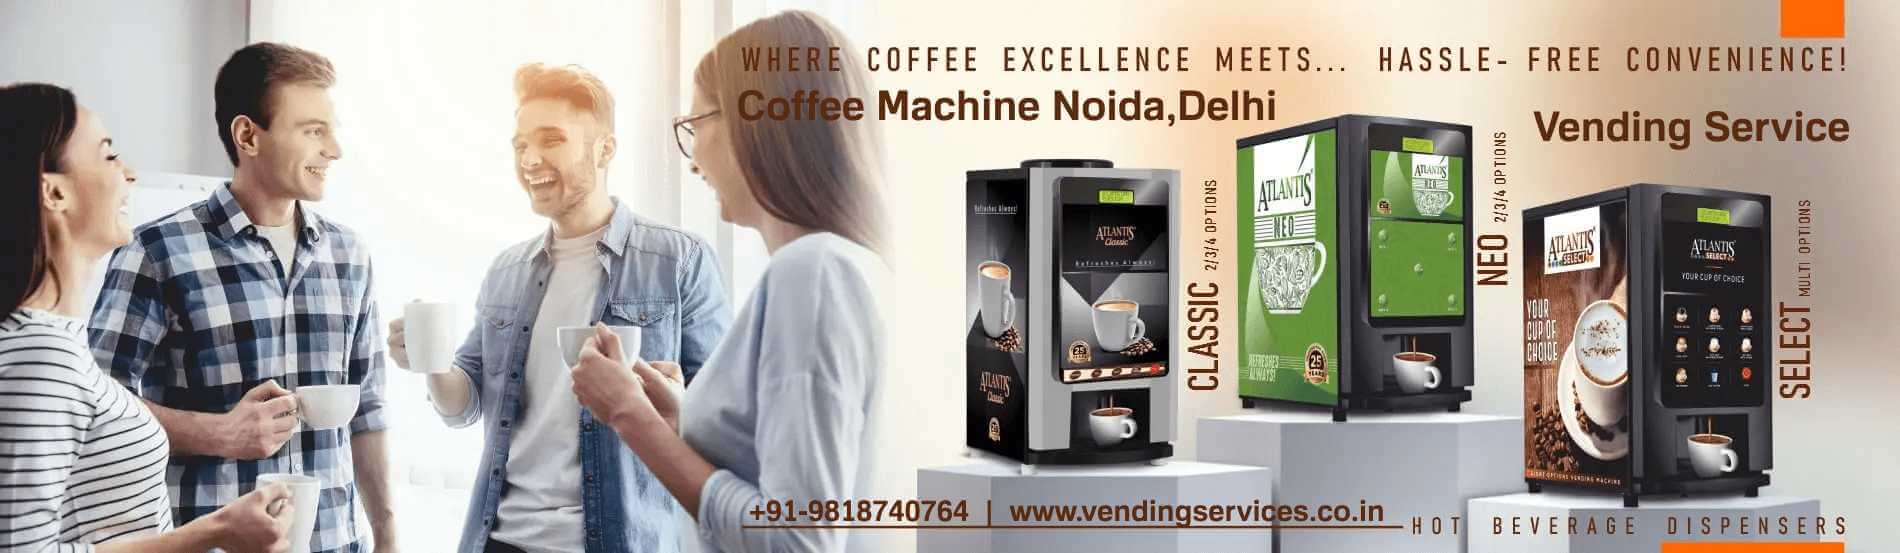 Tea Coffee Vending Machine Noida.